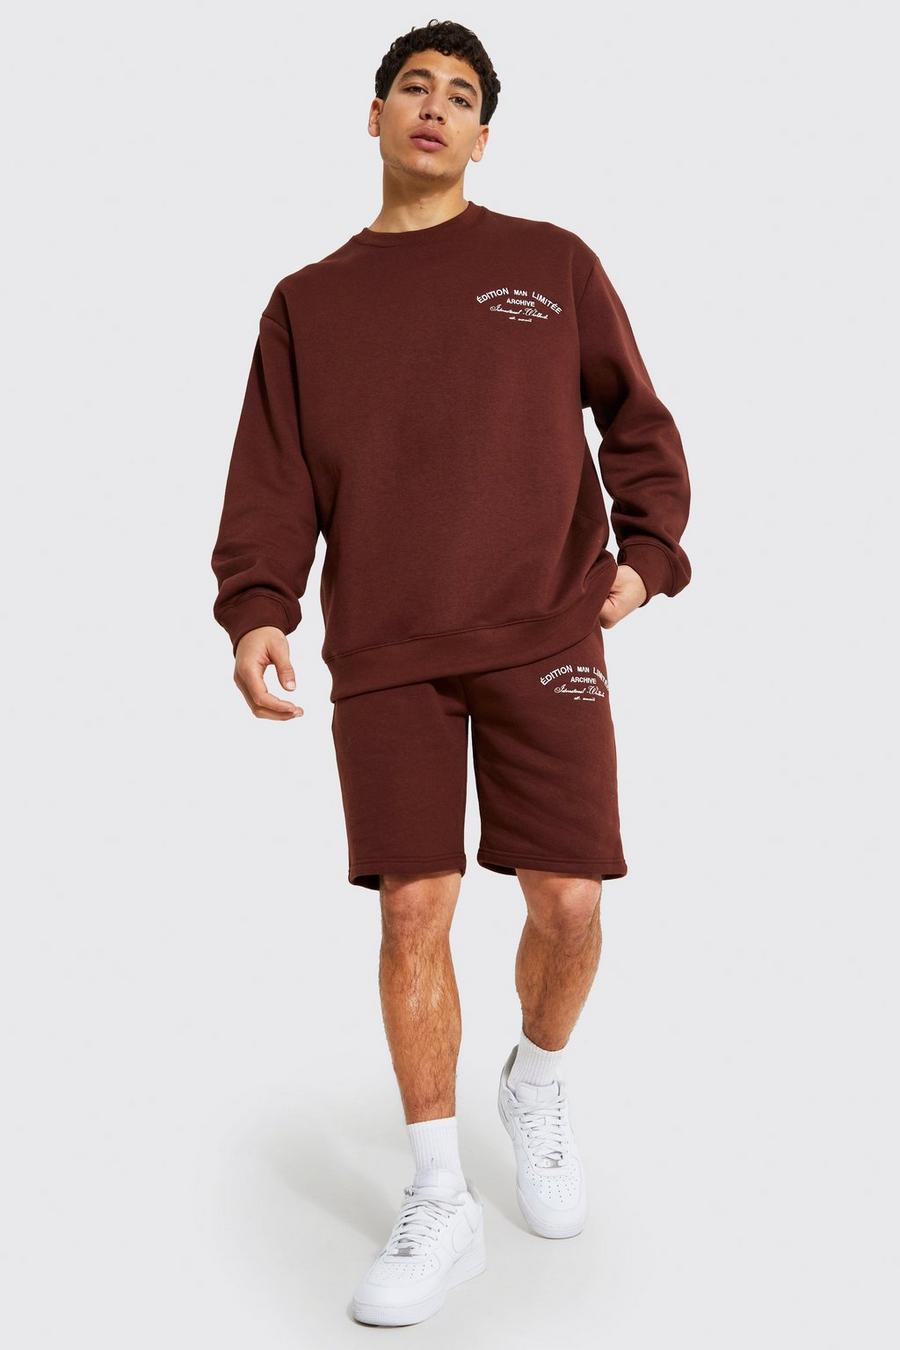 Chocolate brun Oversized Edition Man Sweater Short Tracksuit